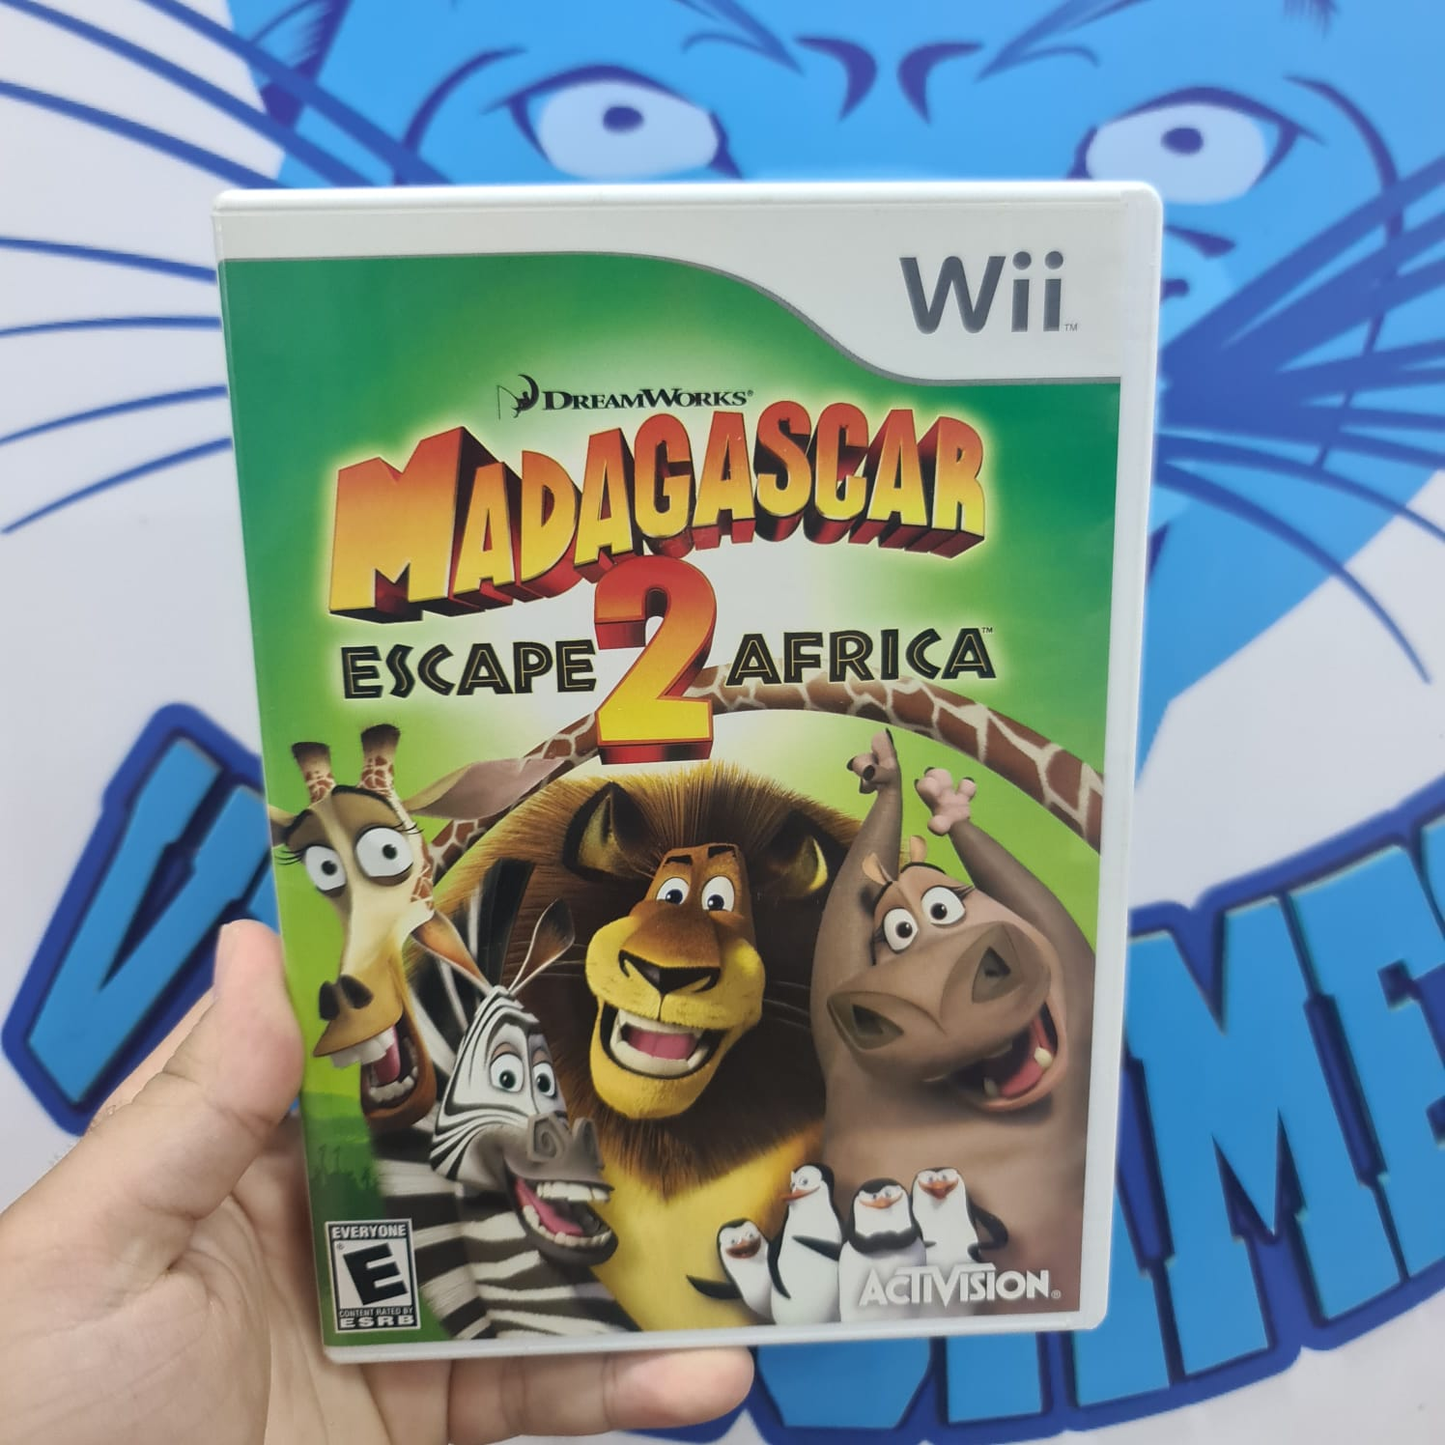 The madagascar-Nintendo wii